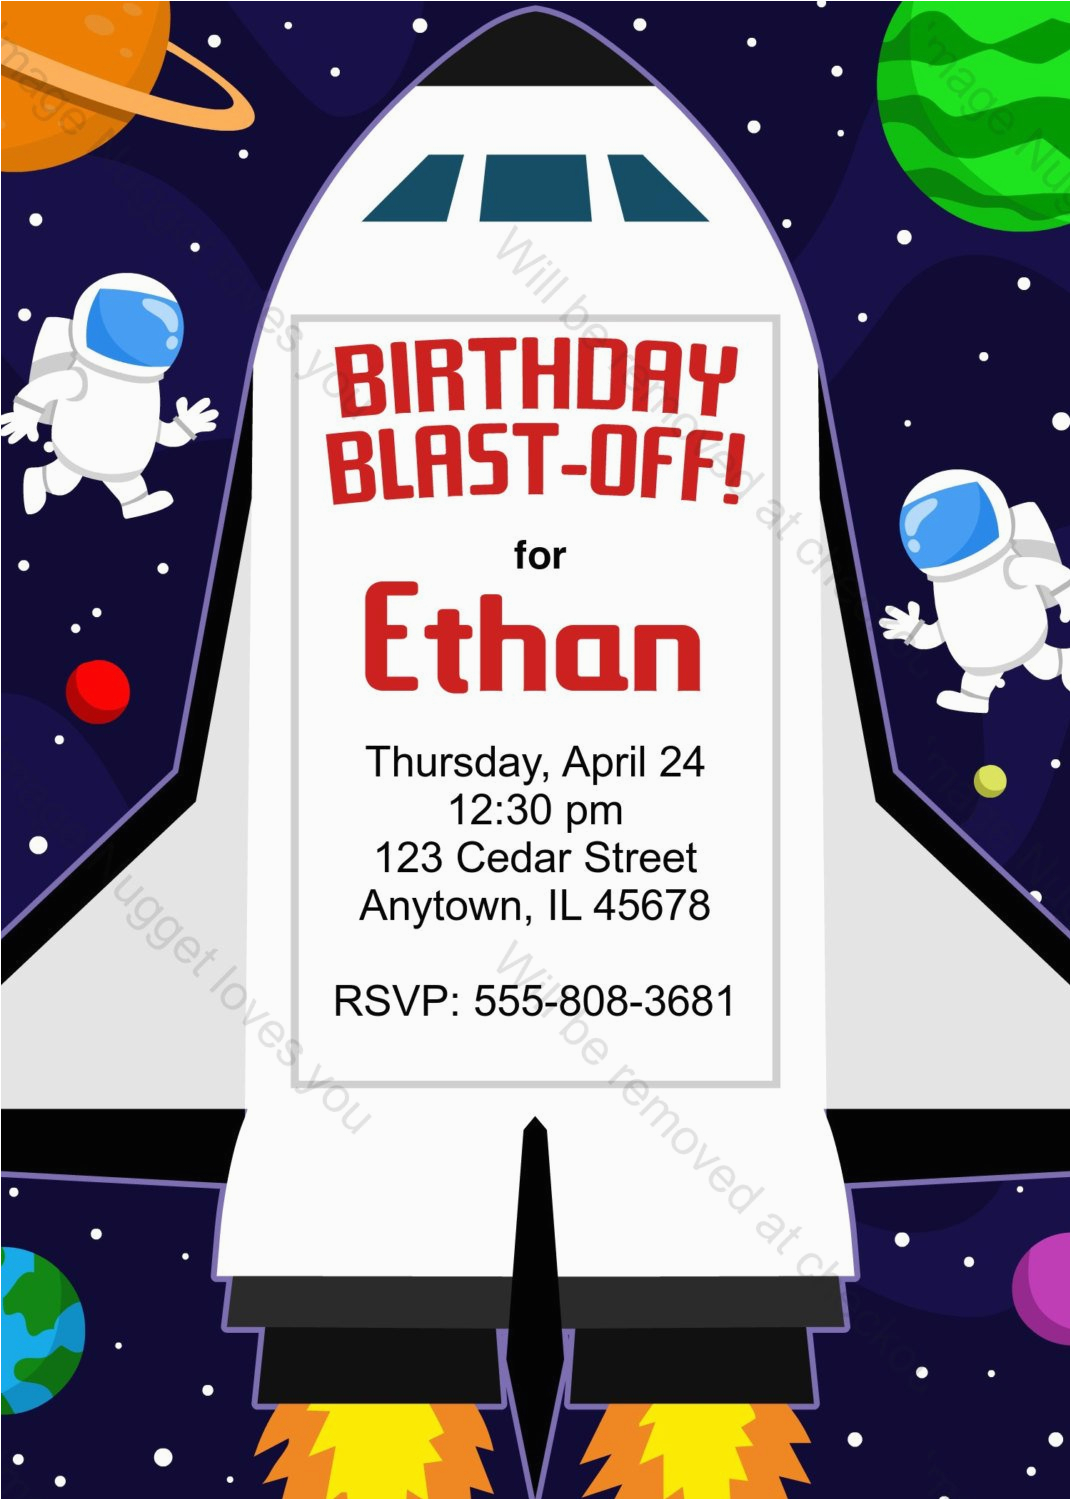 space shuttle birthday invitation printable design